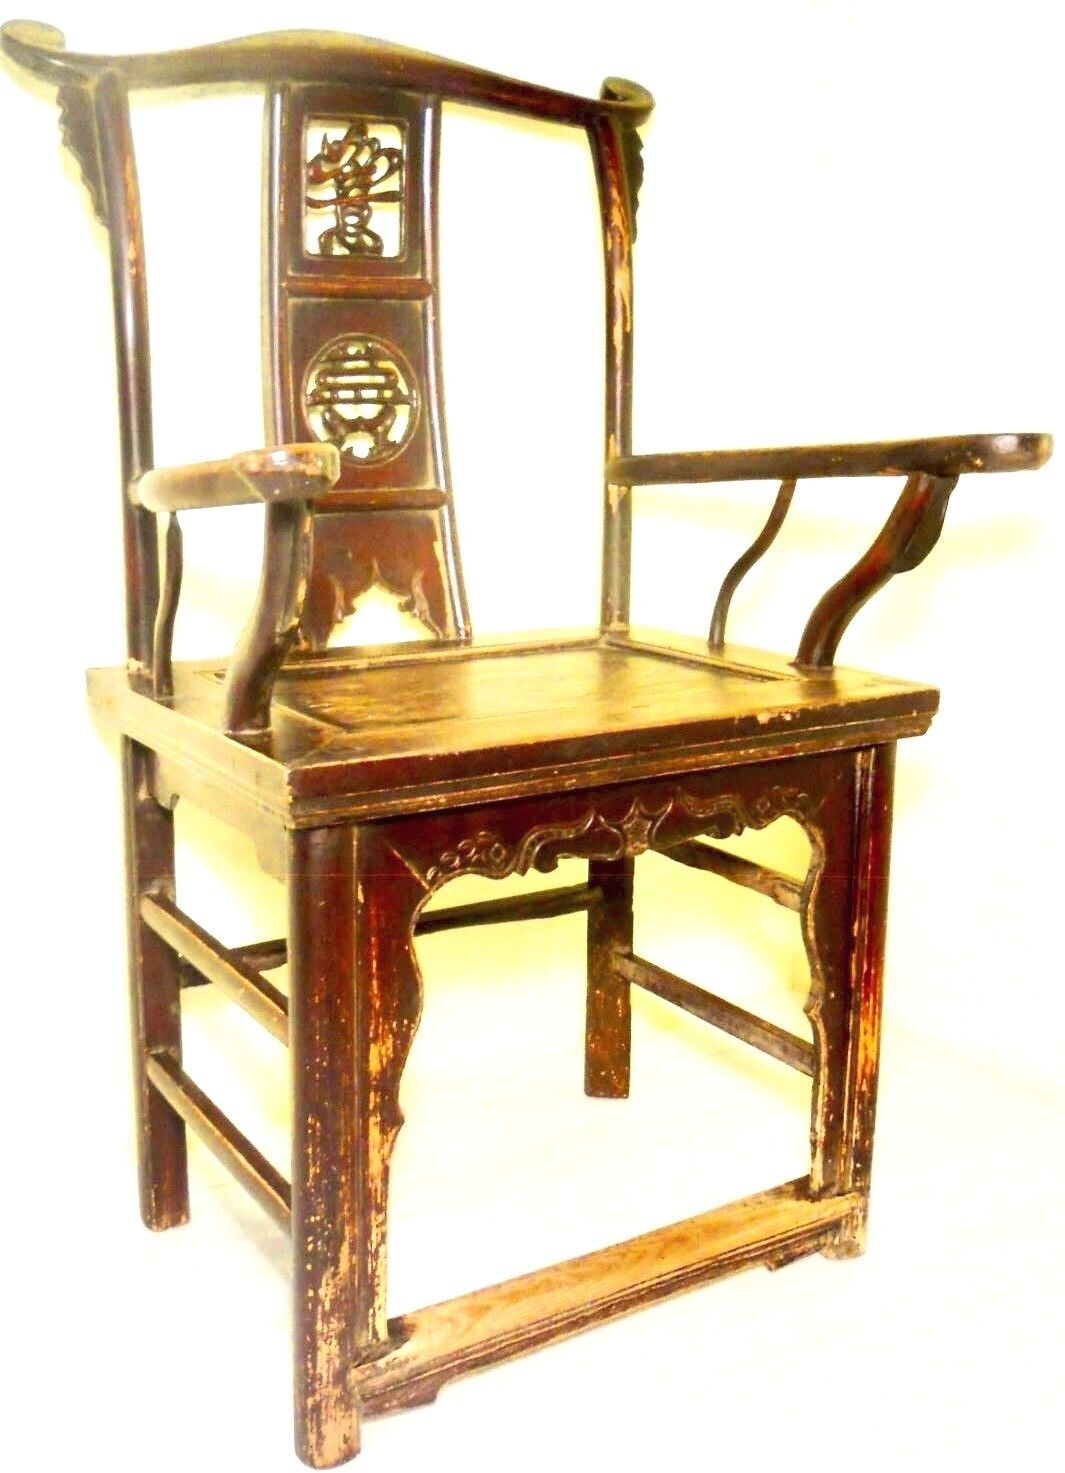 Antique Albuquerque Mall Chinese High Back Arm Chair 2755 Super special price Circa 1800-1849